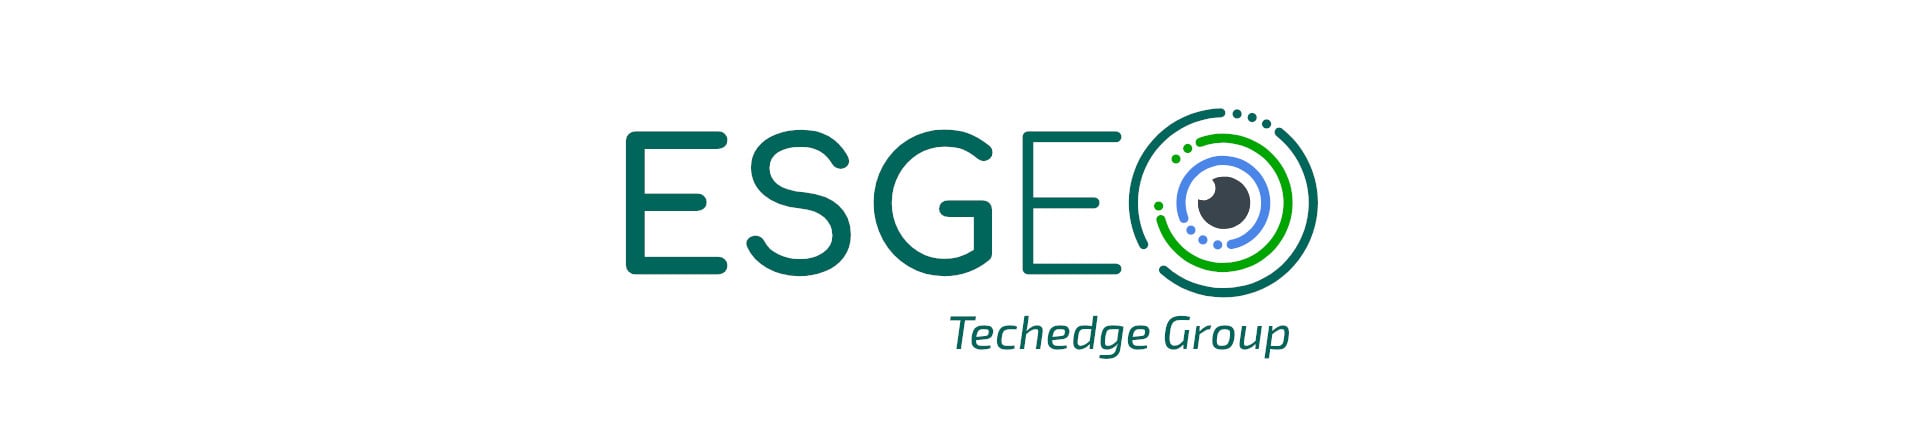 ESGeo - Techedge Group